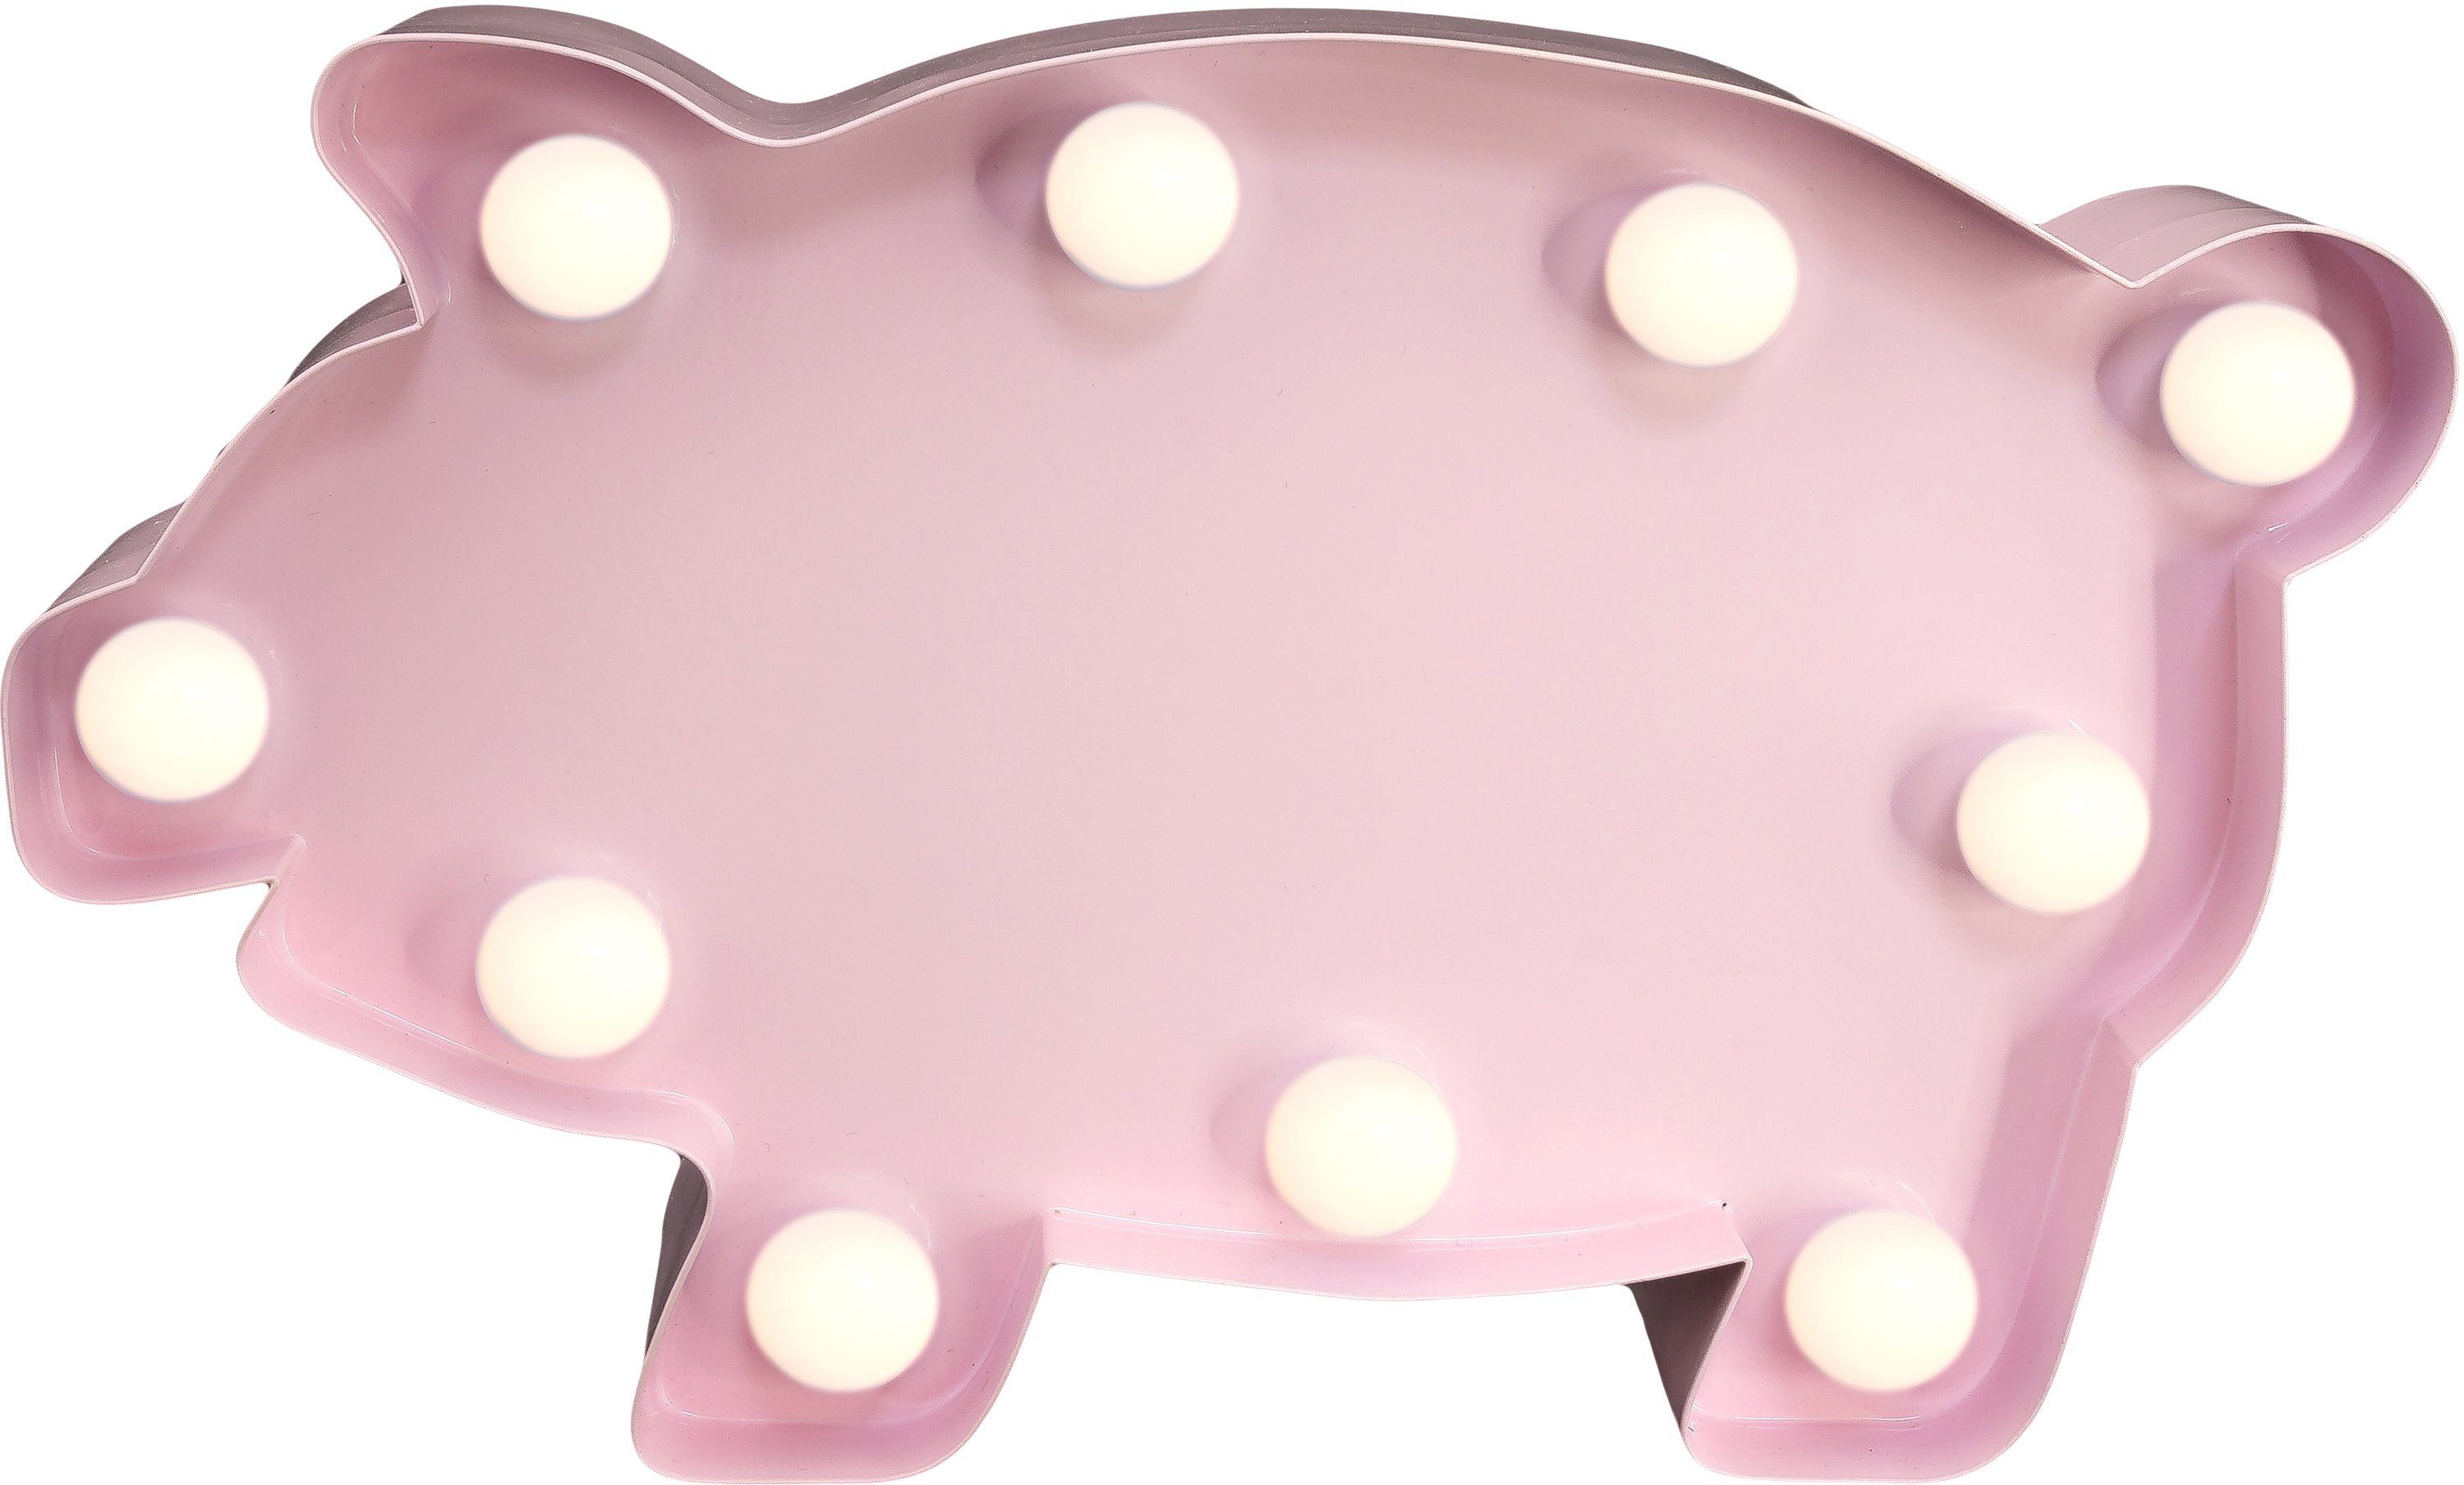 Pig, fest cm Warmweiß, Pig mit integriert, LED Wandlampe, 23x14 LIGHTS 10 LED - LEDs Tischlampe Dekolicht MARQUEE festverbauten